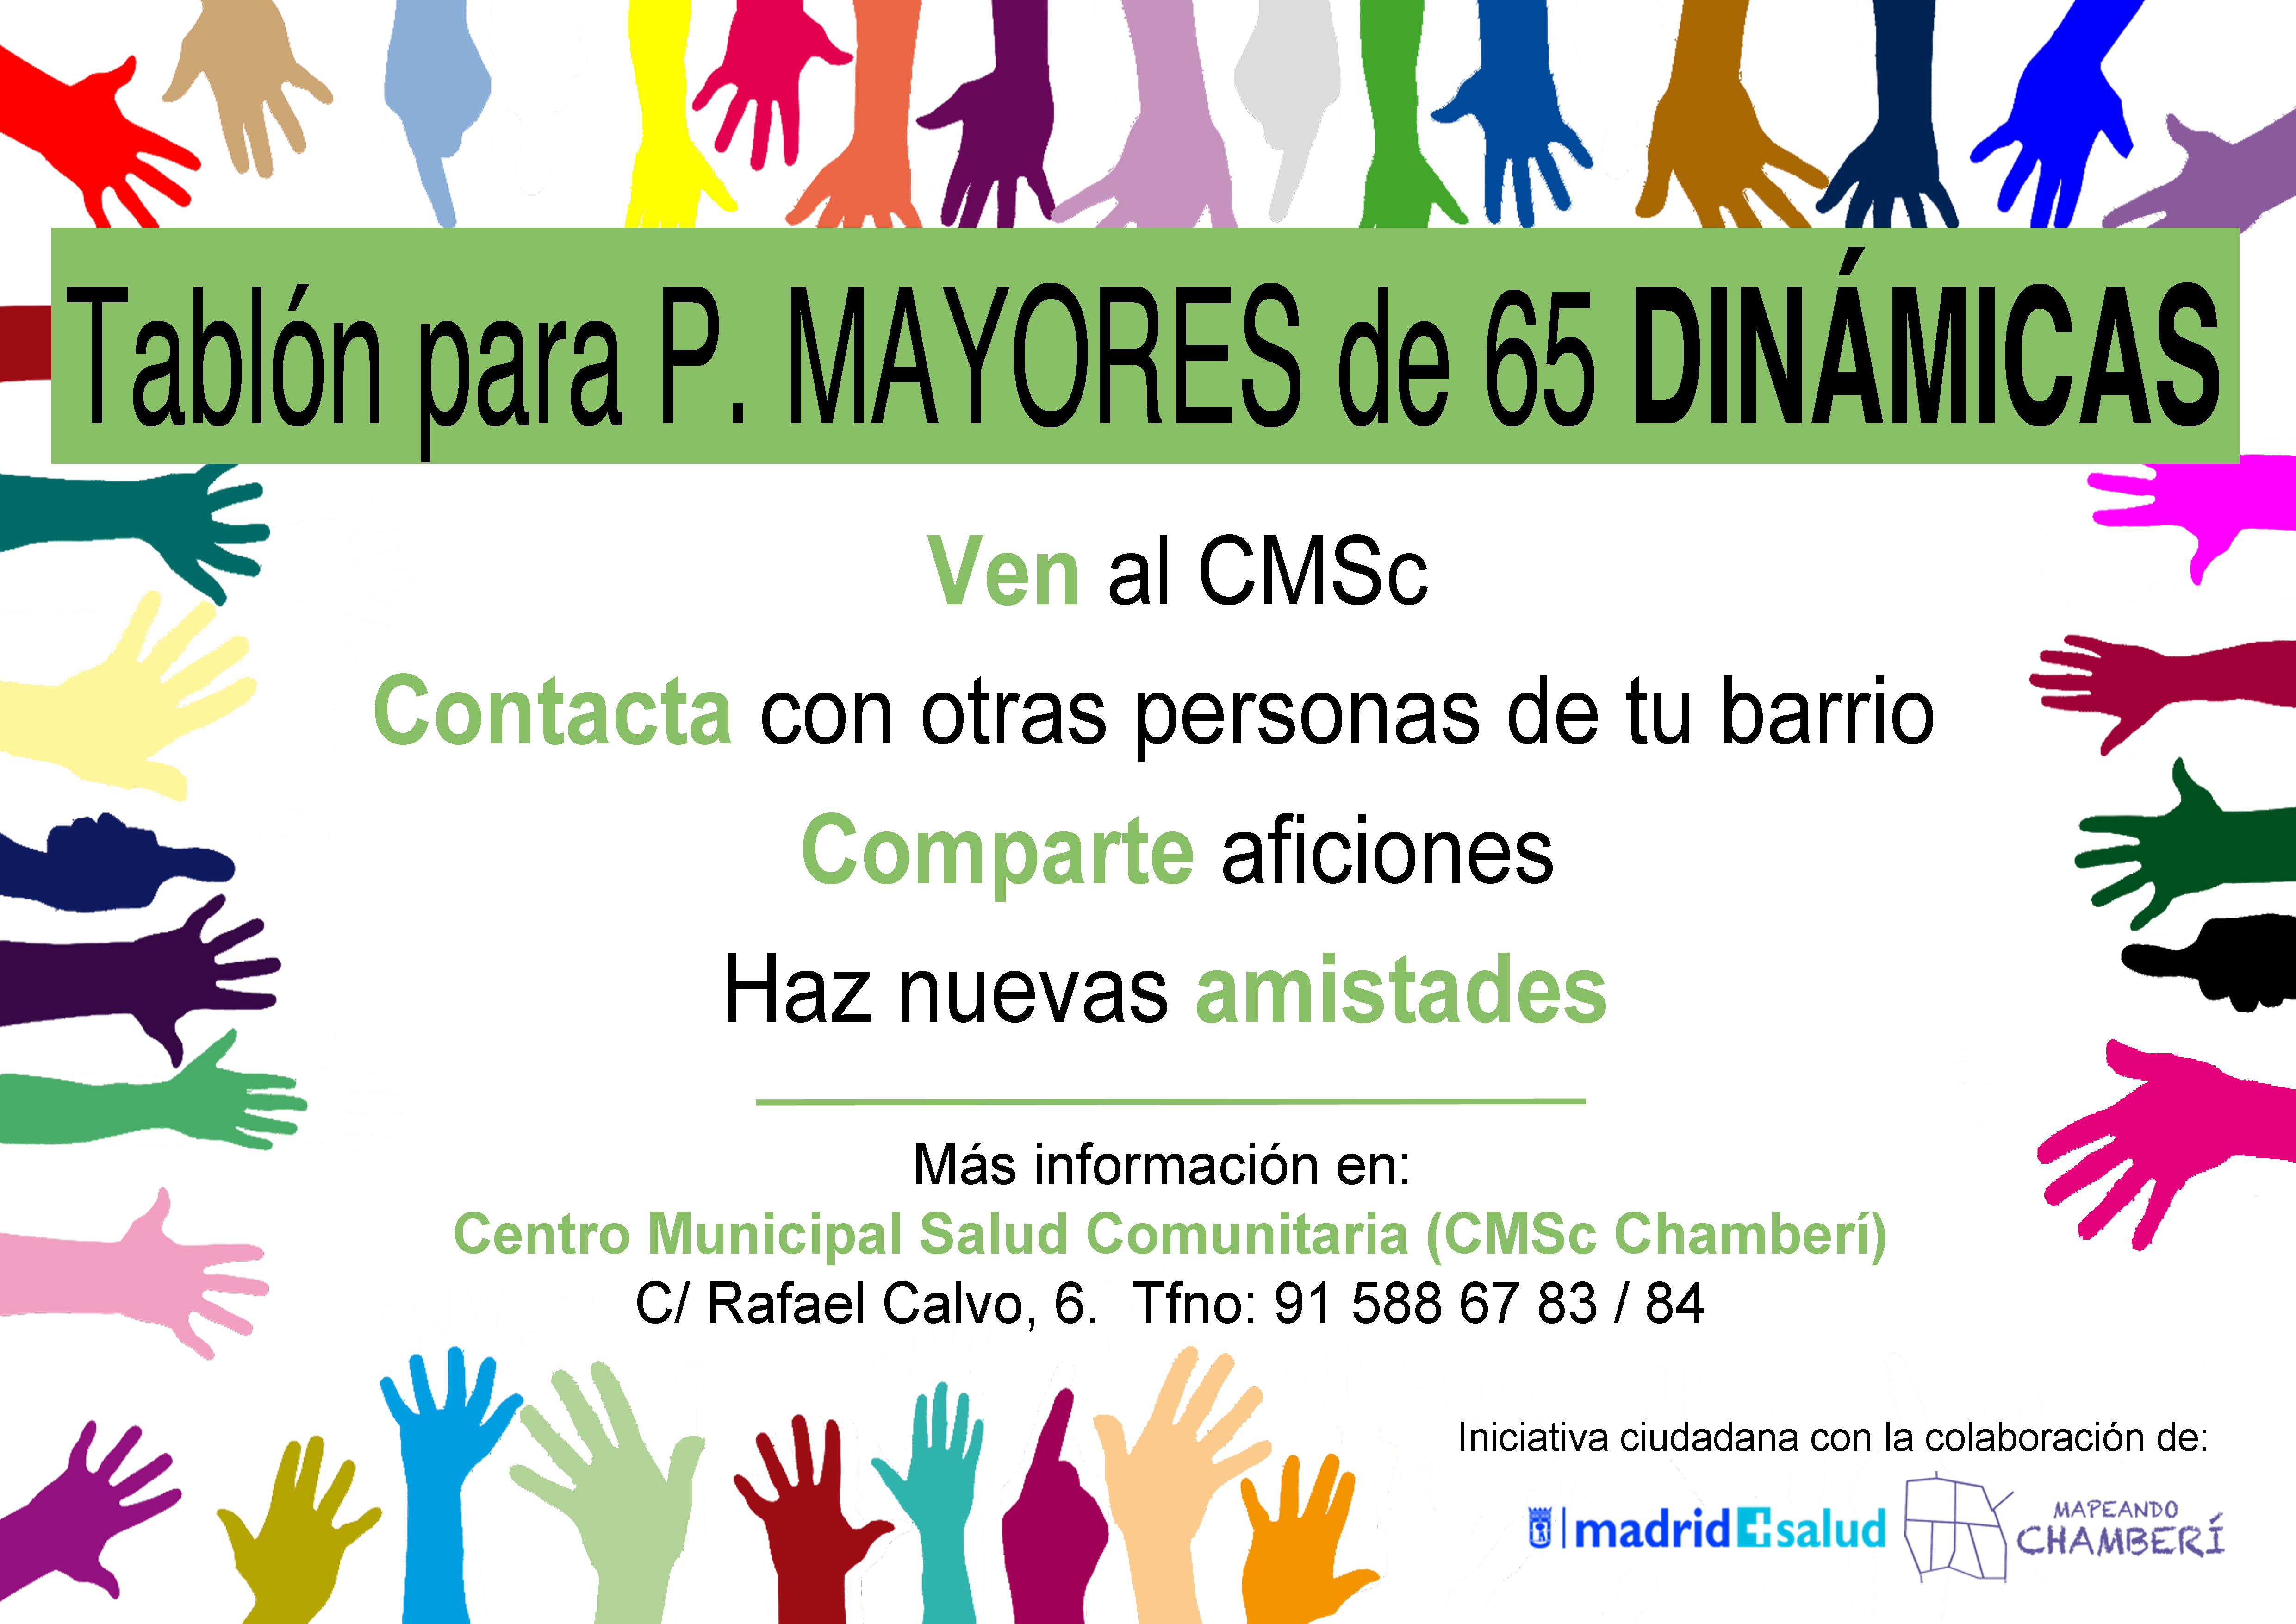 ¡Ven al CMSc Chamberí y Cuelga tu Ficha!